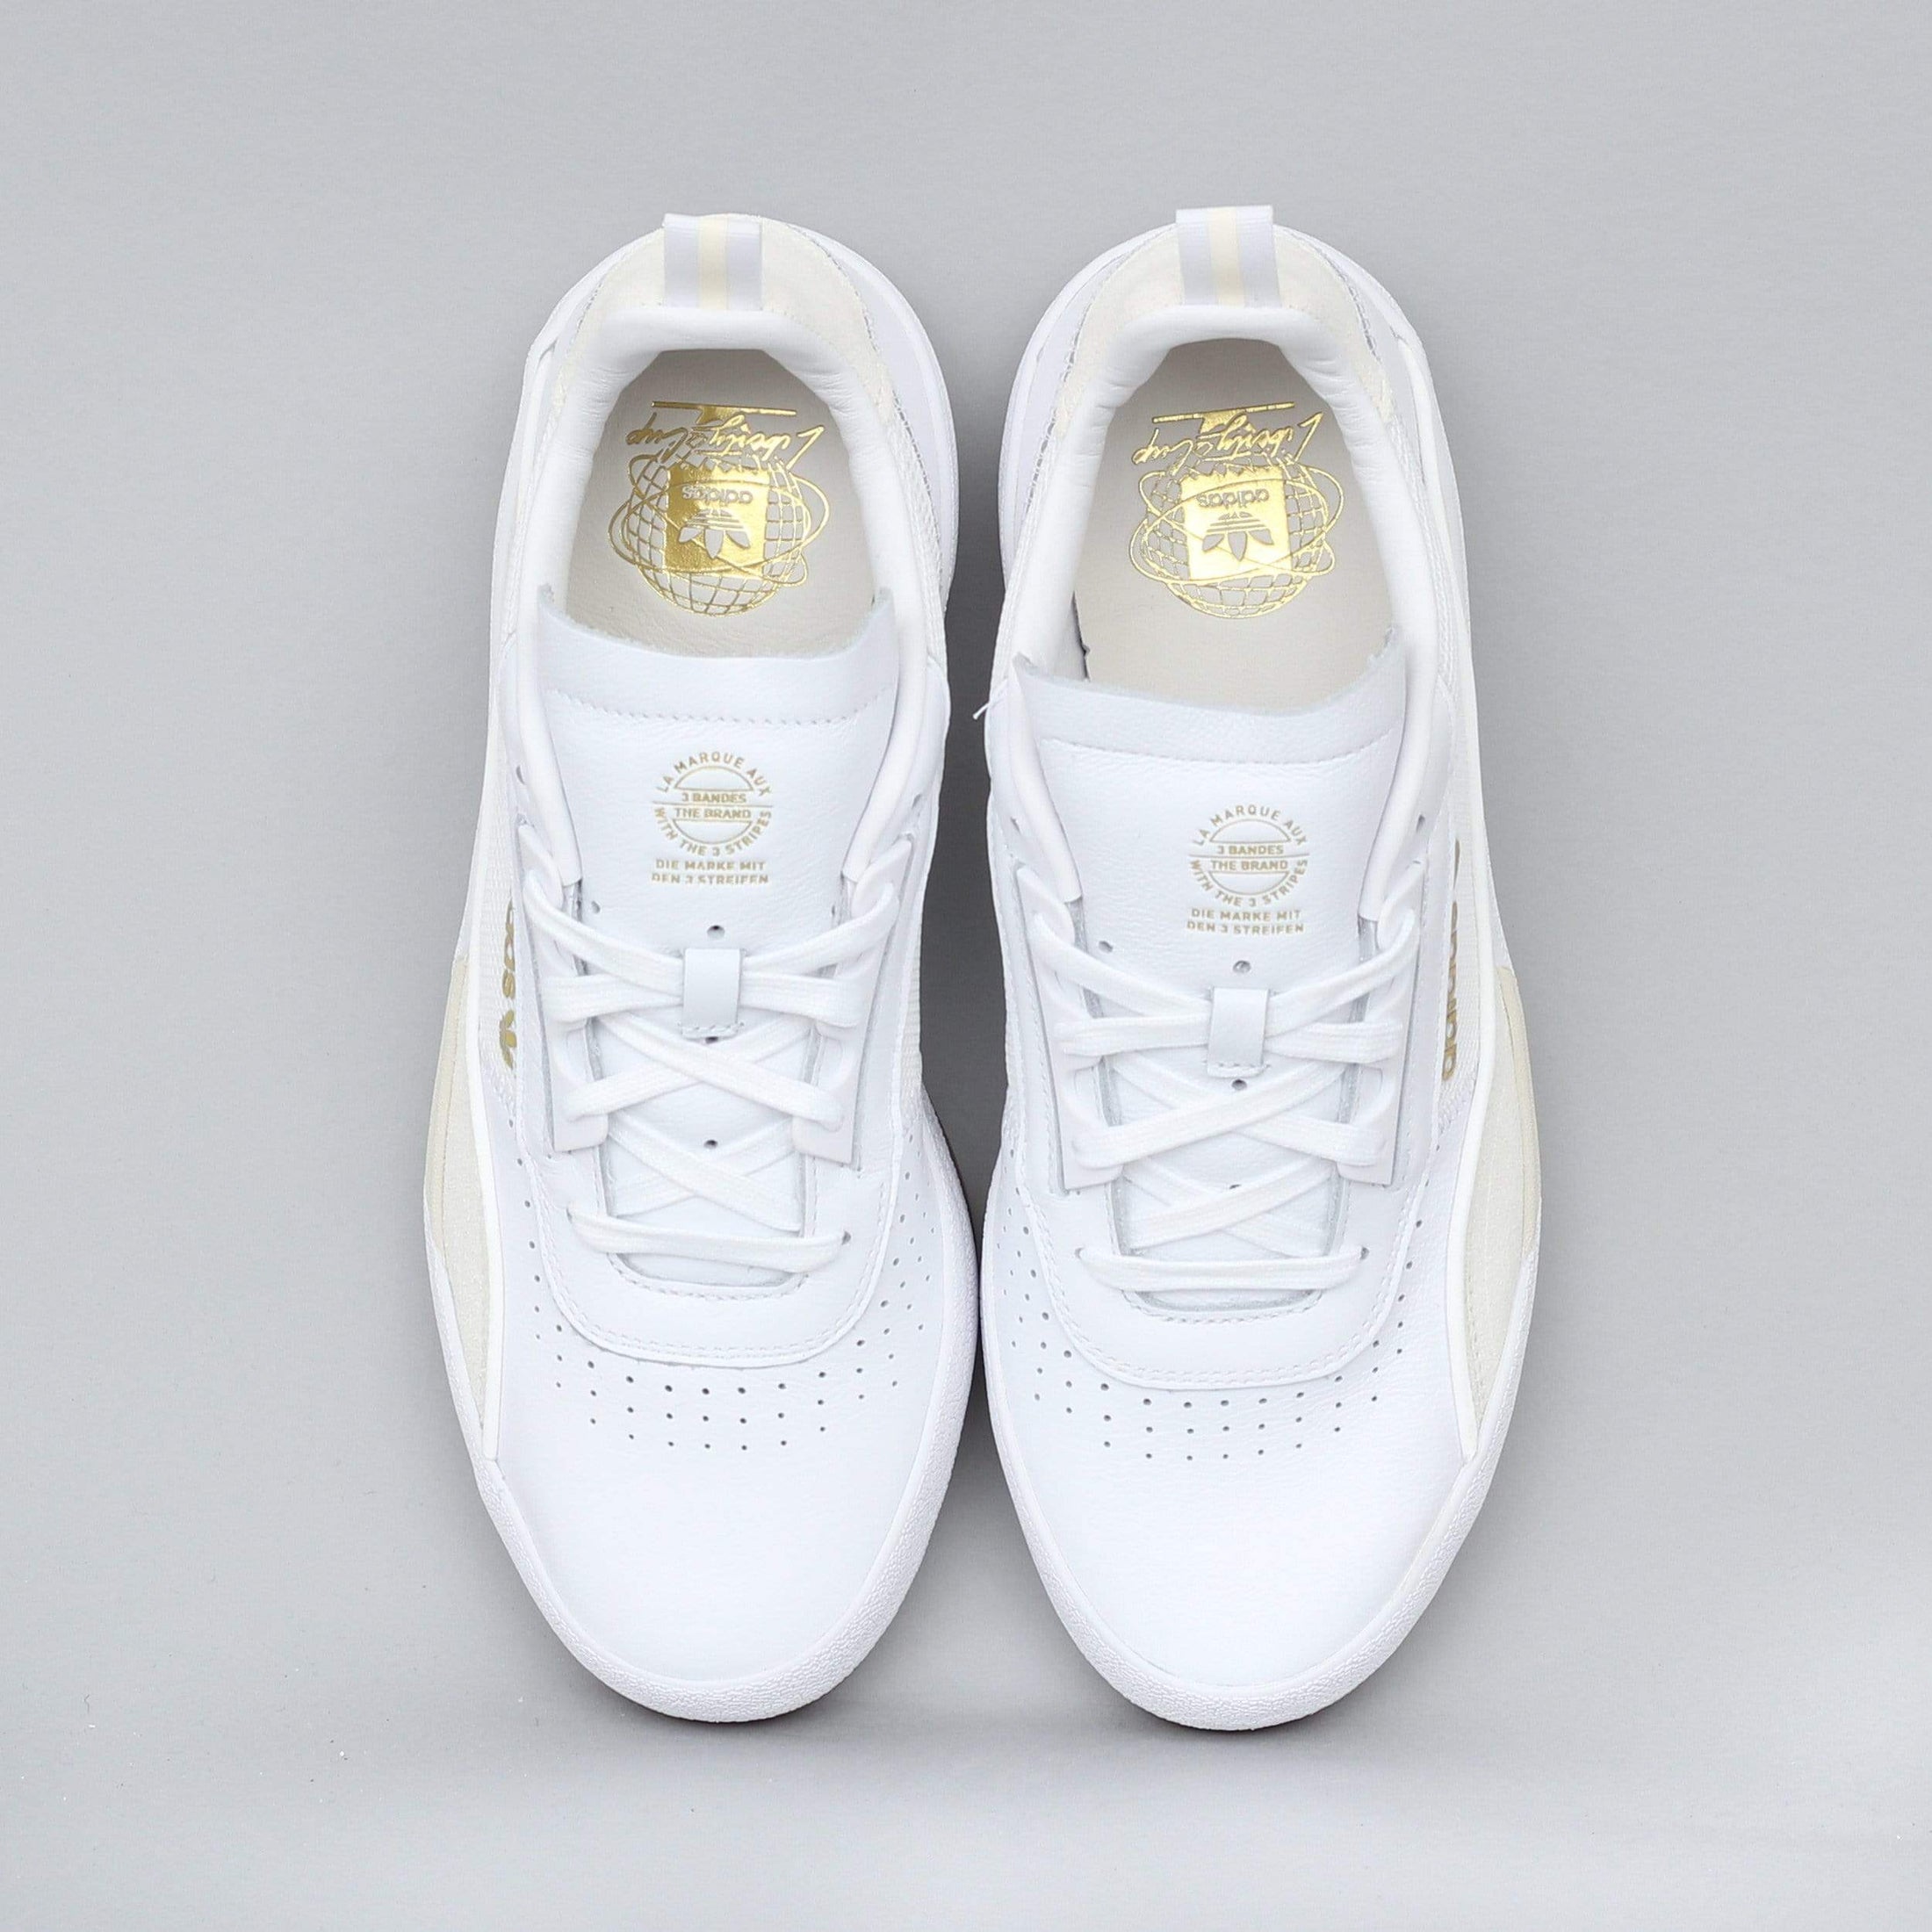 adidas Liberty Cup X Flushing Meadows Shoes Footwear White / Gold Metallic / Gum4